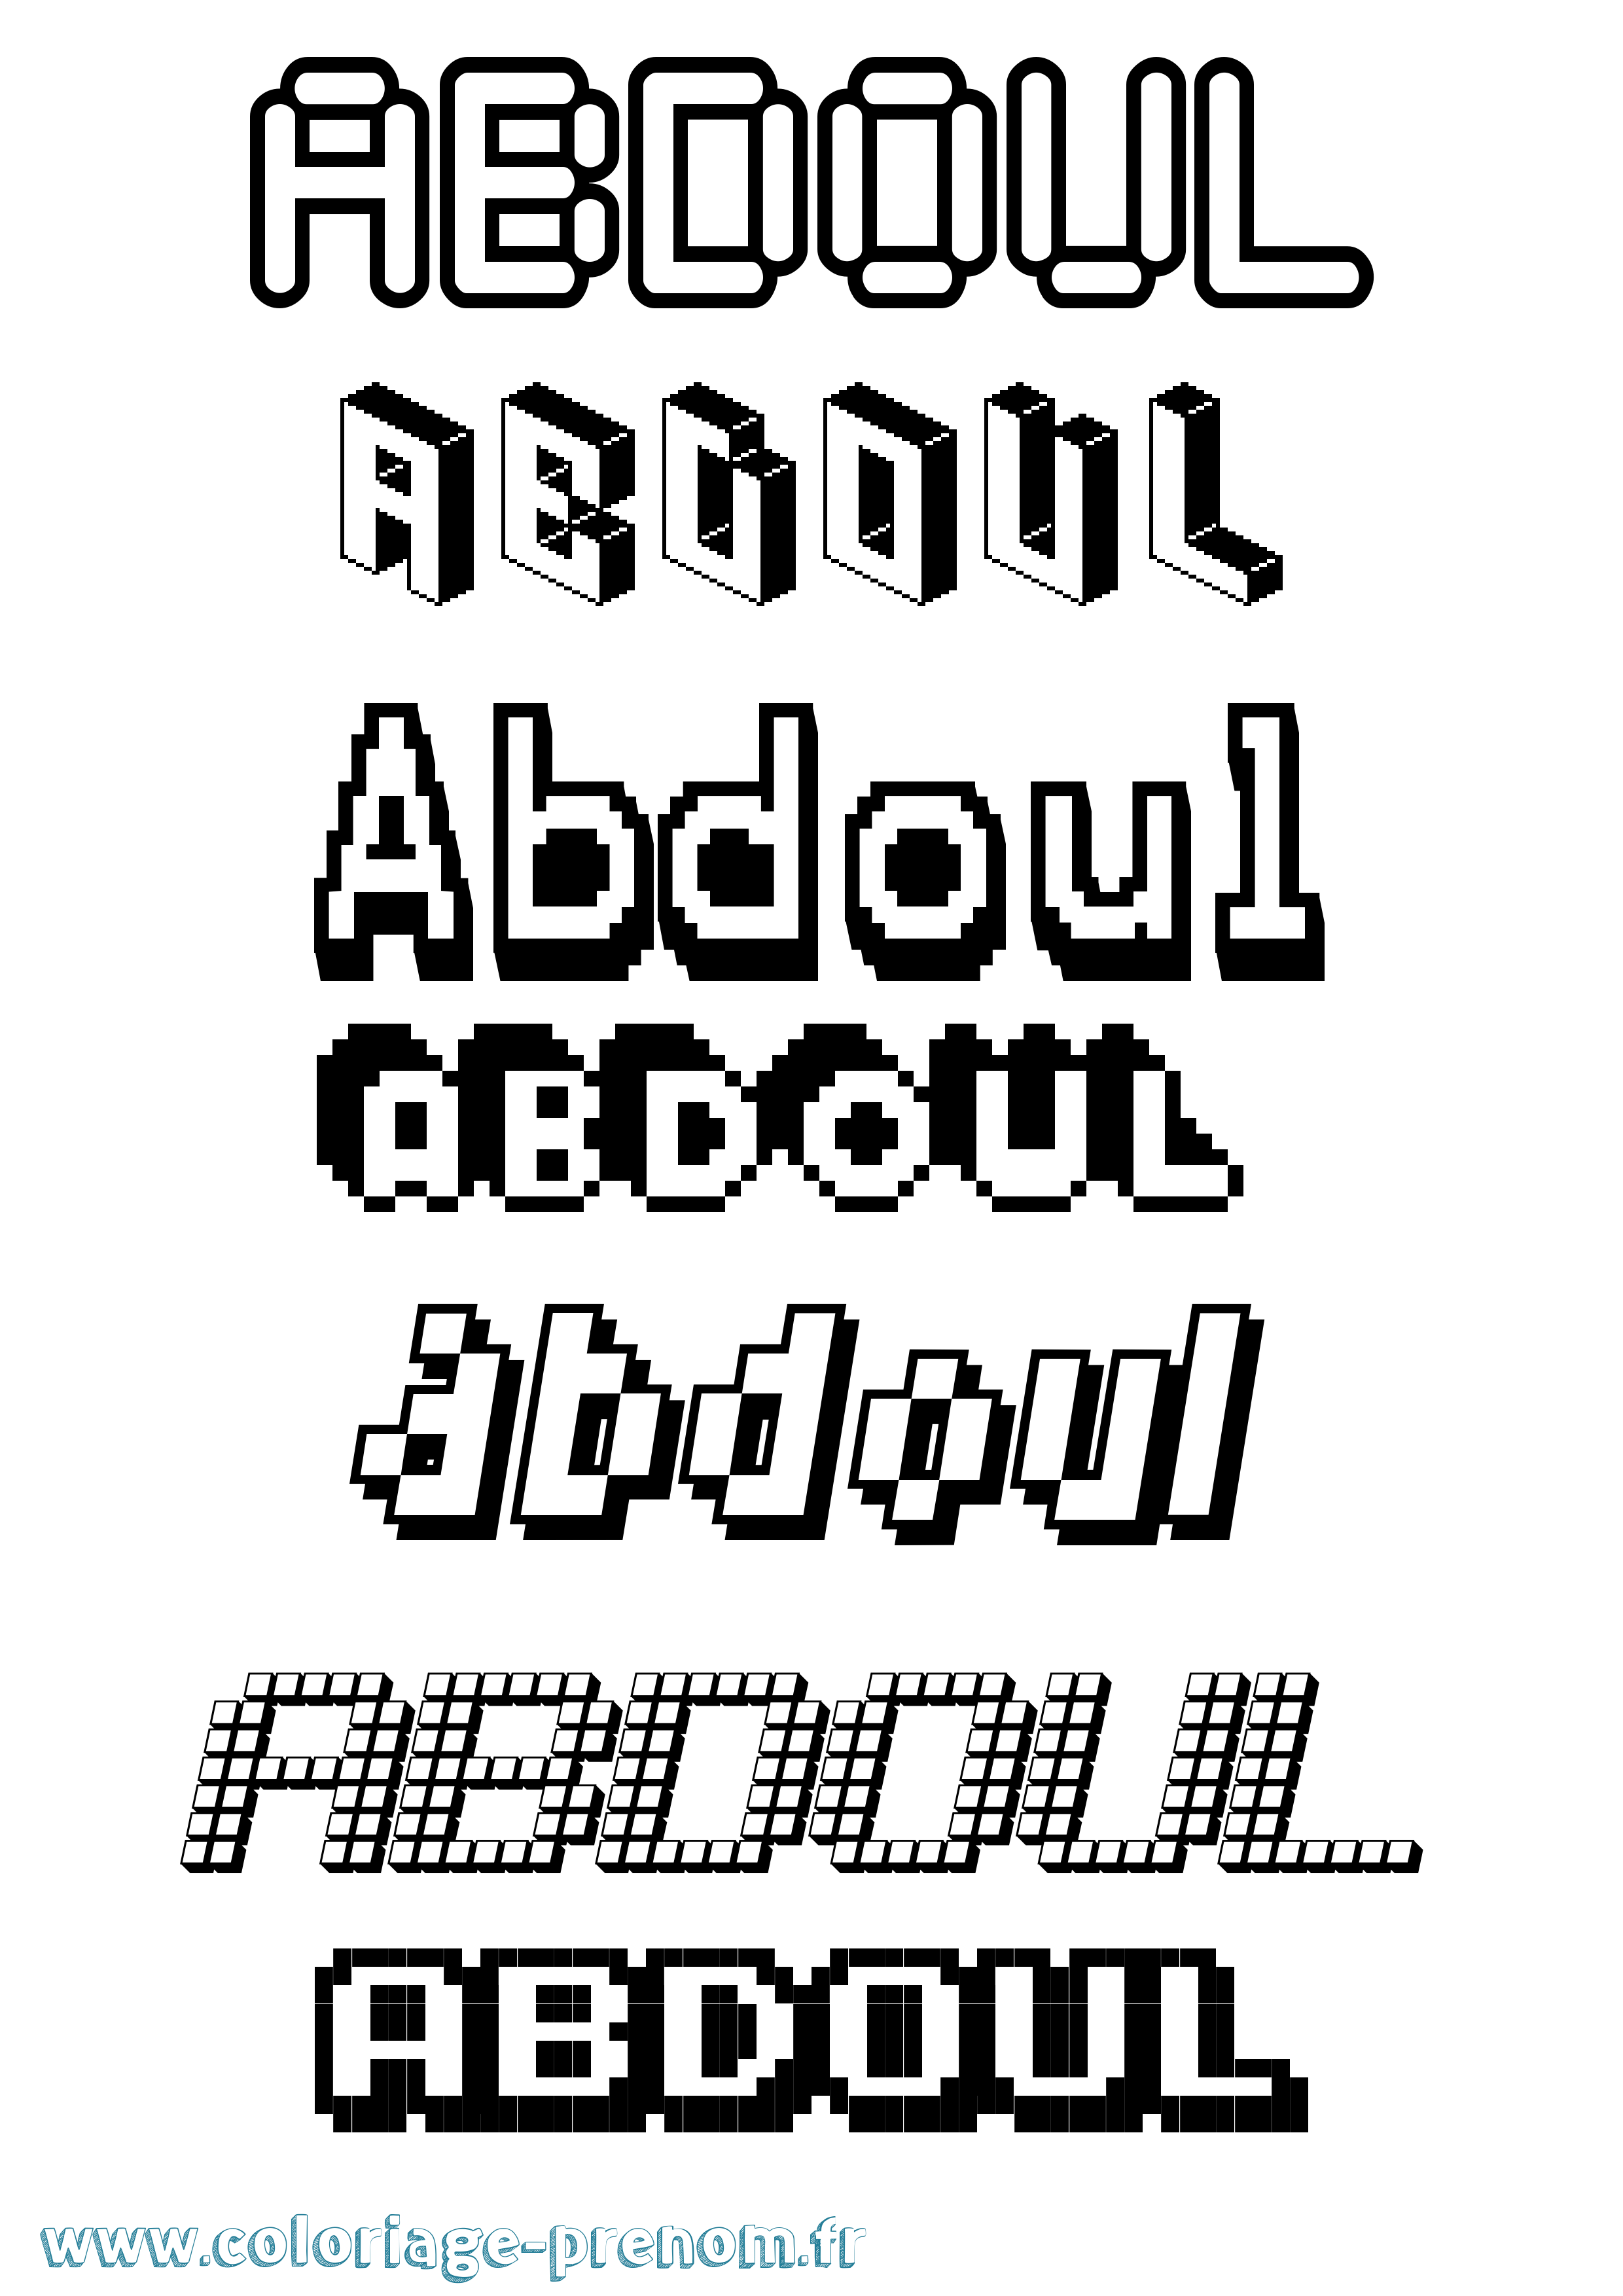 Coloriage prénom Abdoul